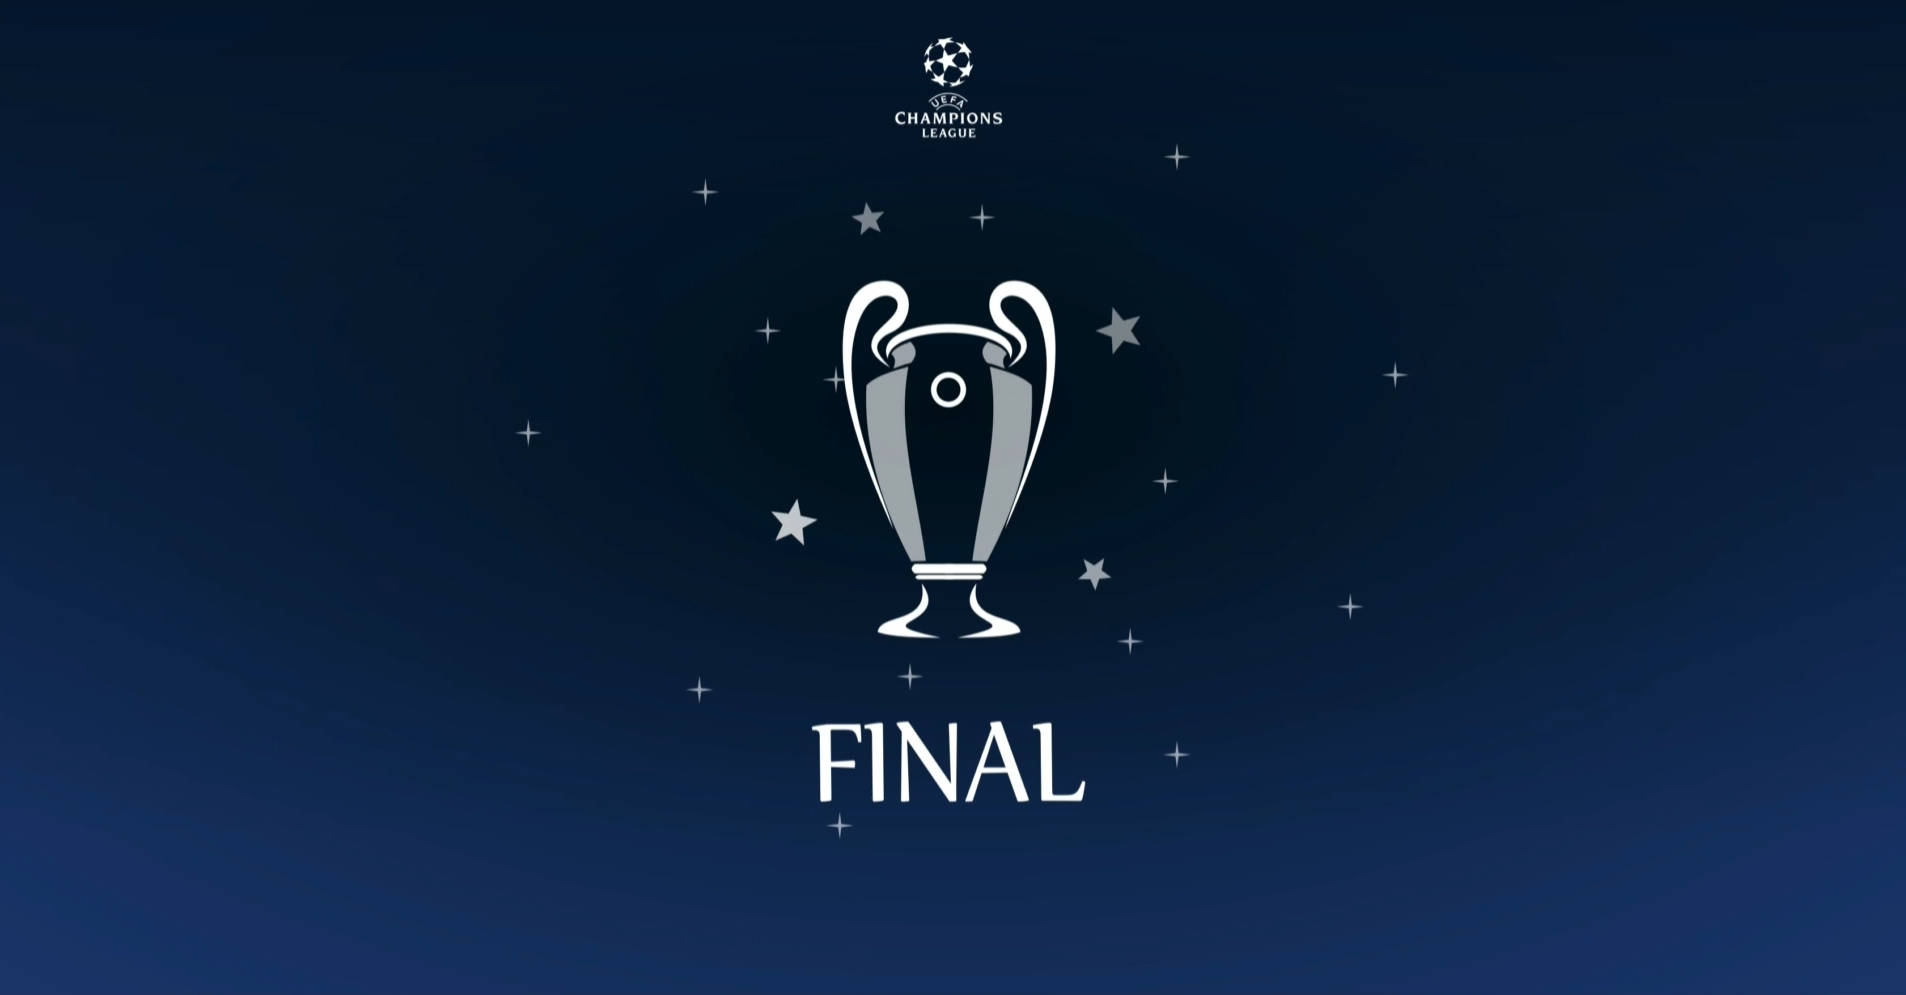 Uefa Champions League Final Trophy Minimalist Background